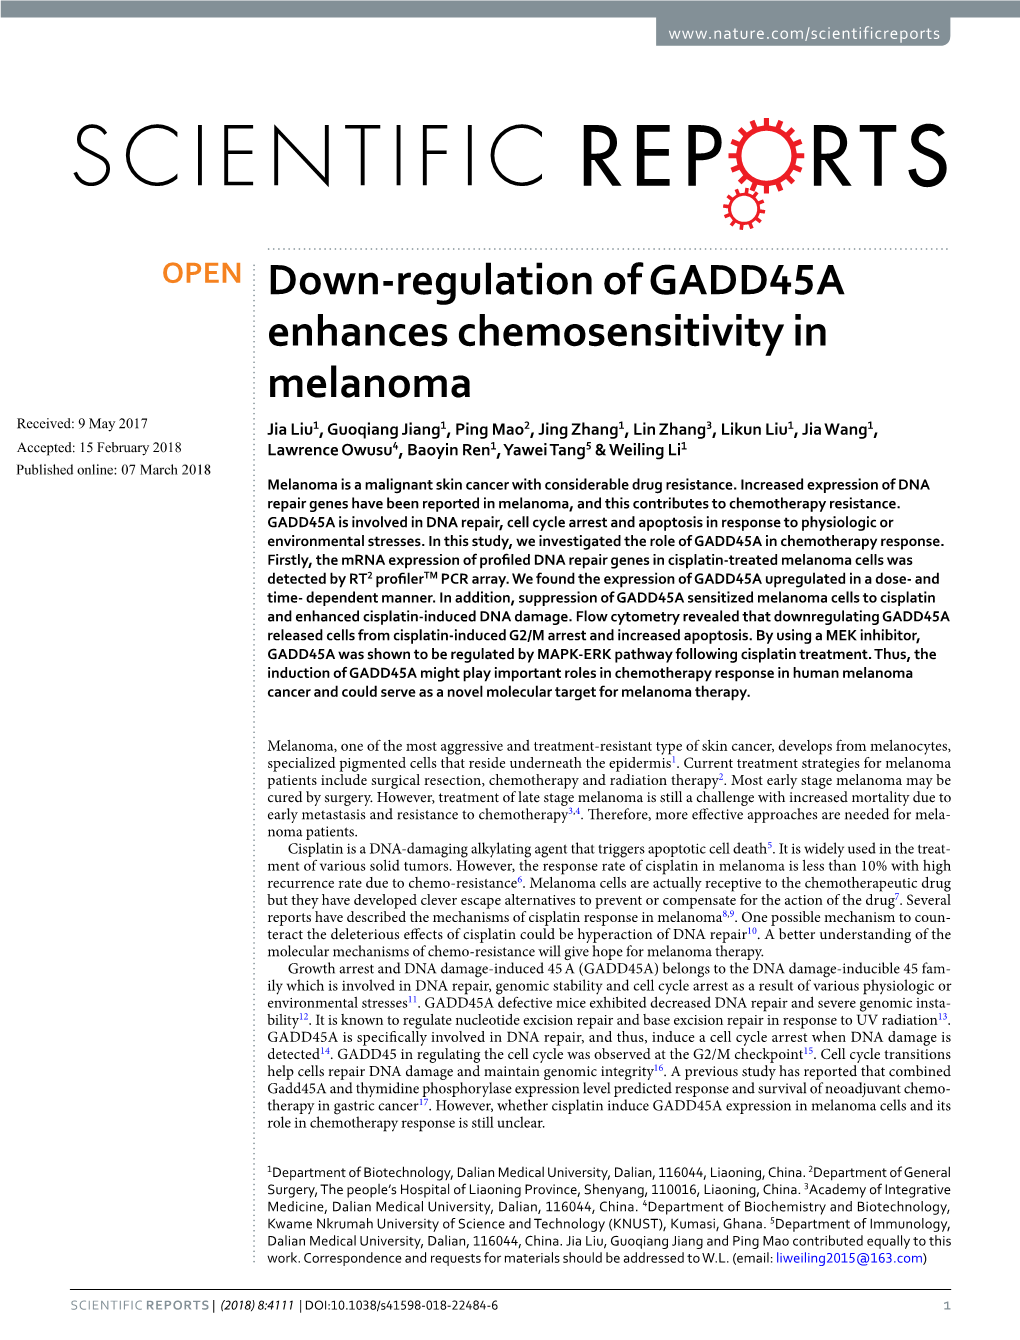 Down-Regulation of GADD45A Enhances Chemosensitivity In